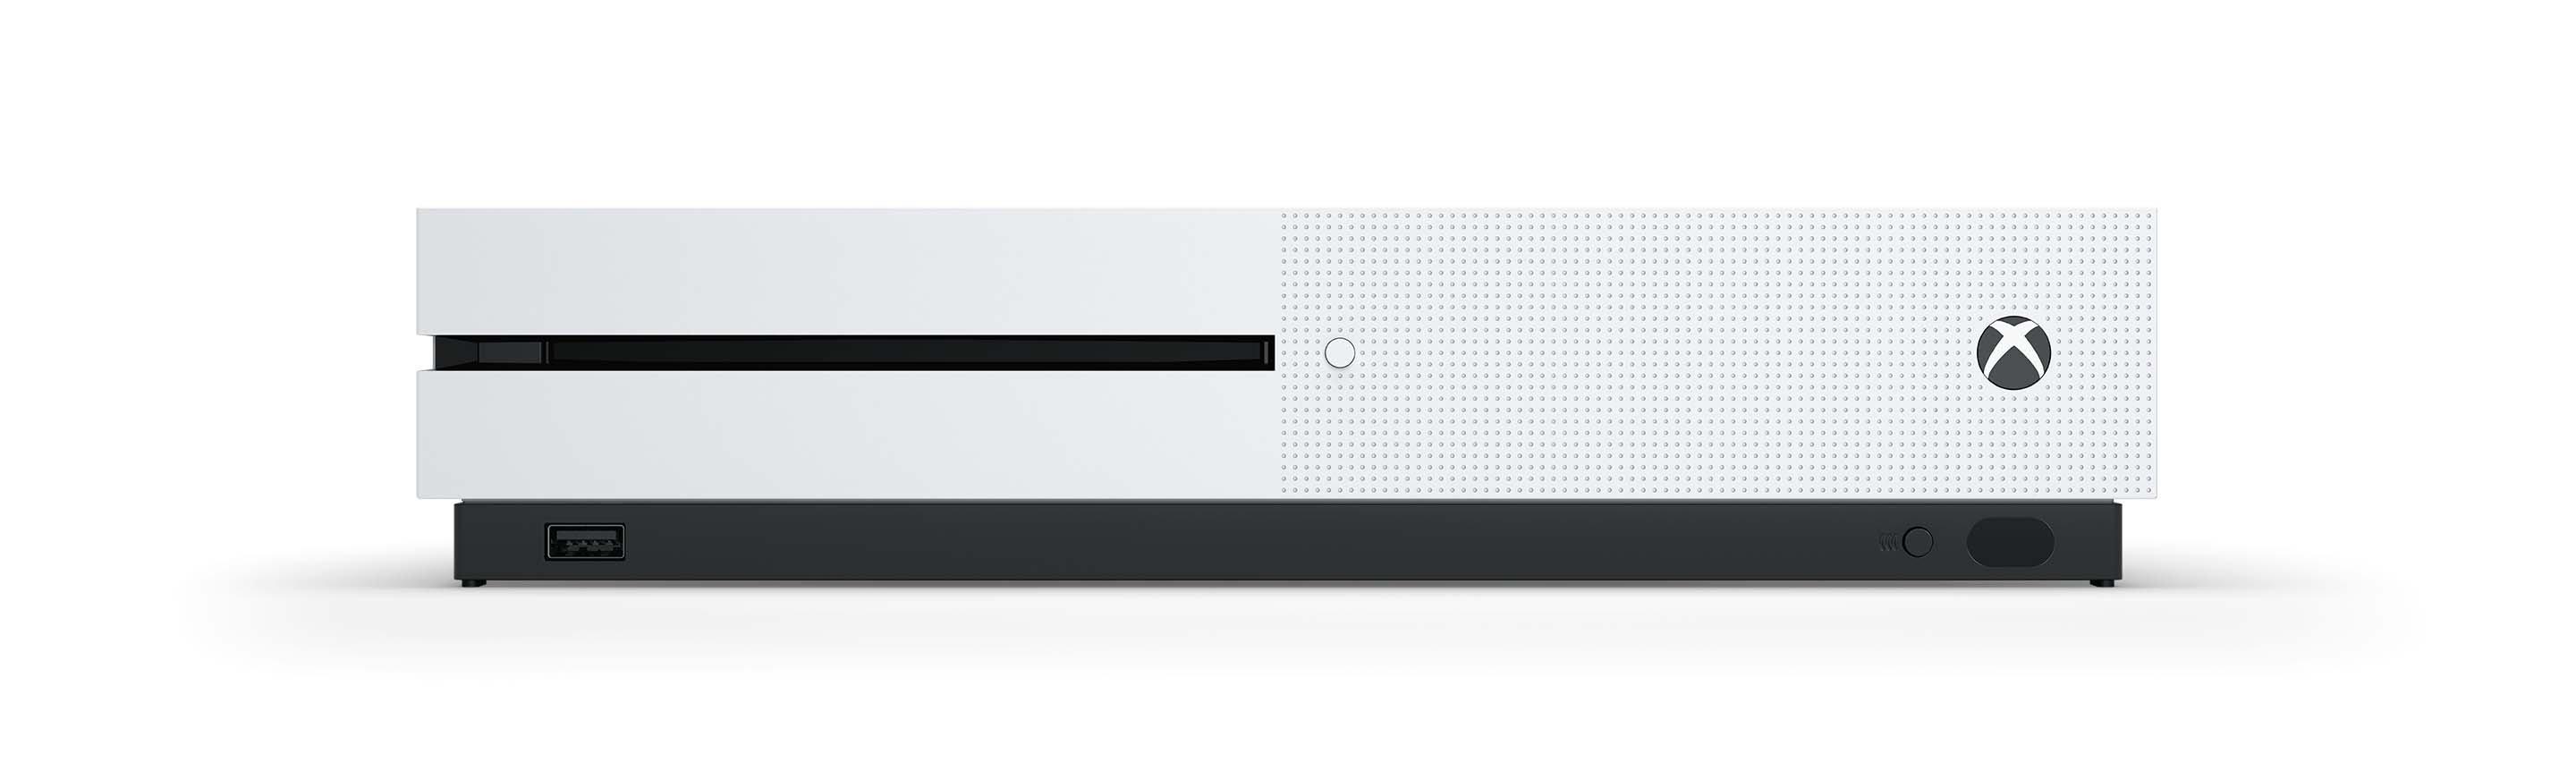 Xbox One S White 1tb Xbox One Gamestop - xbox one s roblox bundle 1tb xbox one gamestop